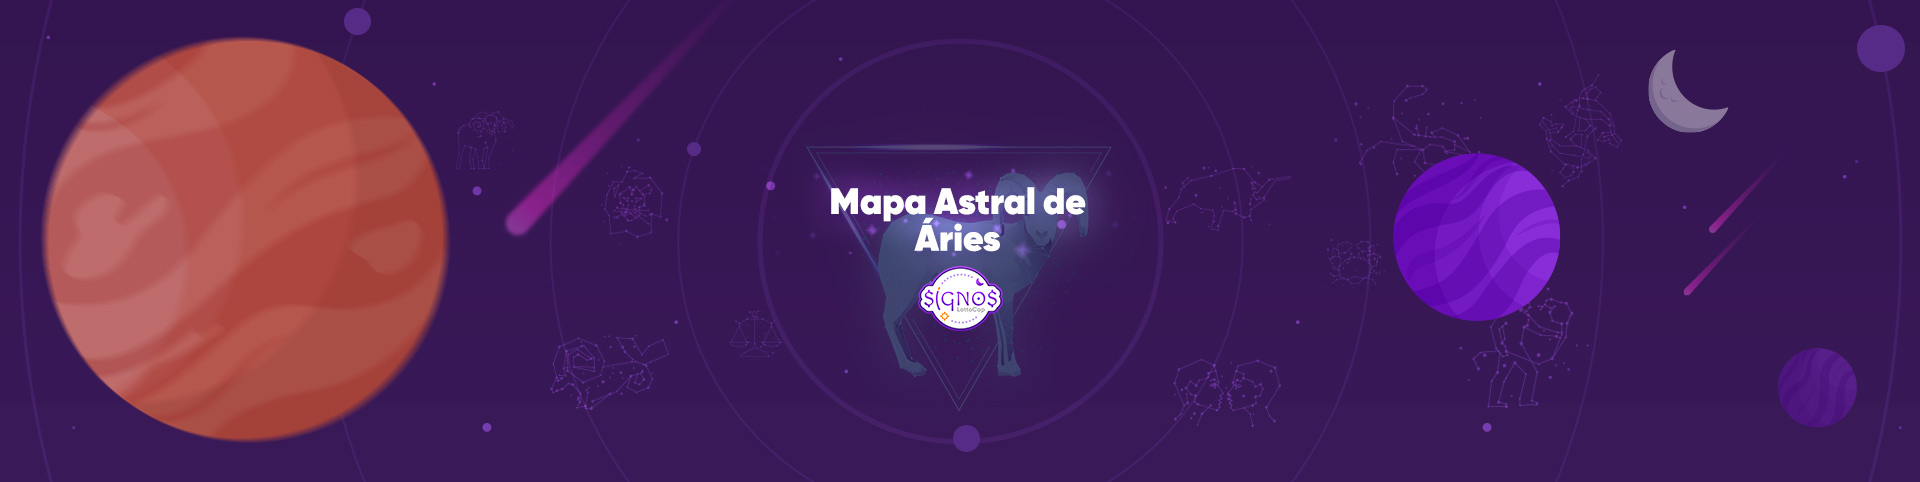 Mapa-astral-aries